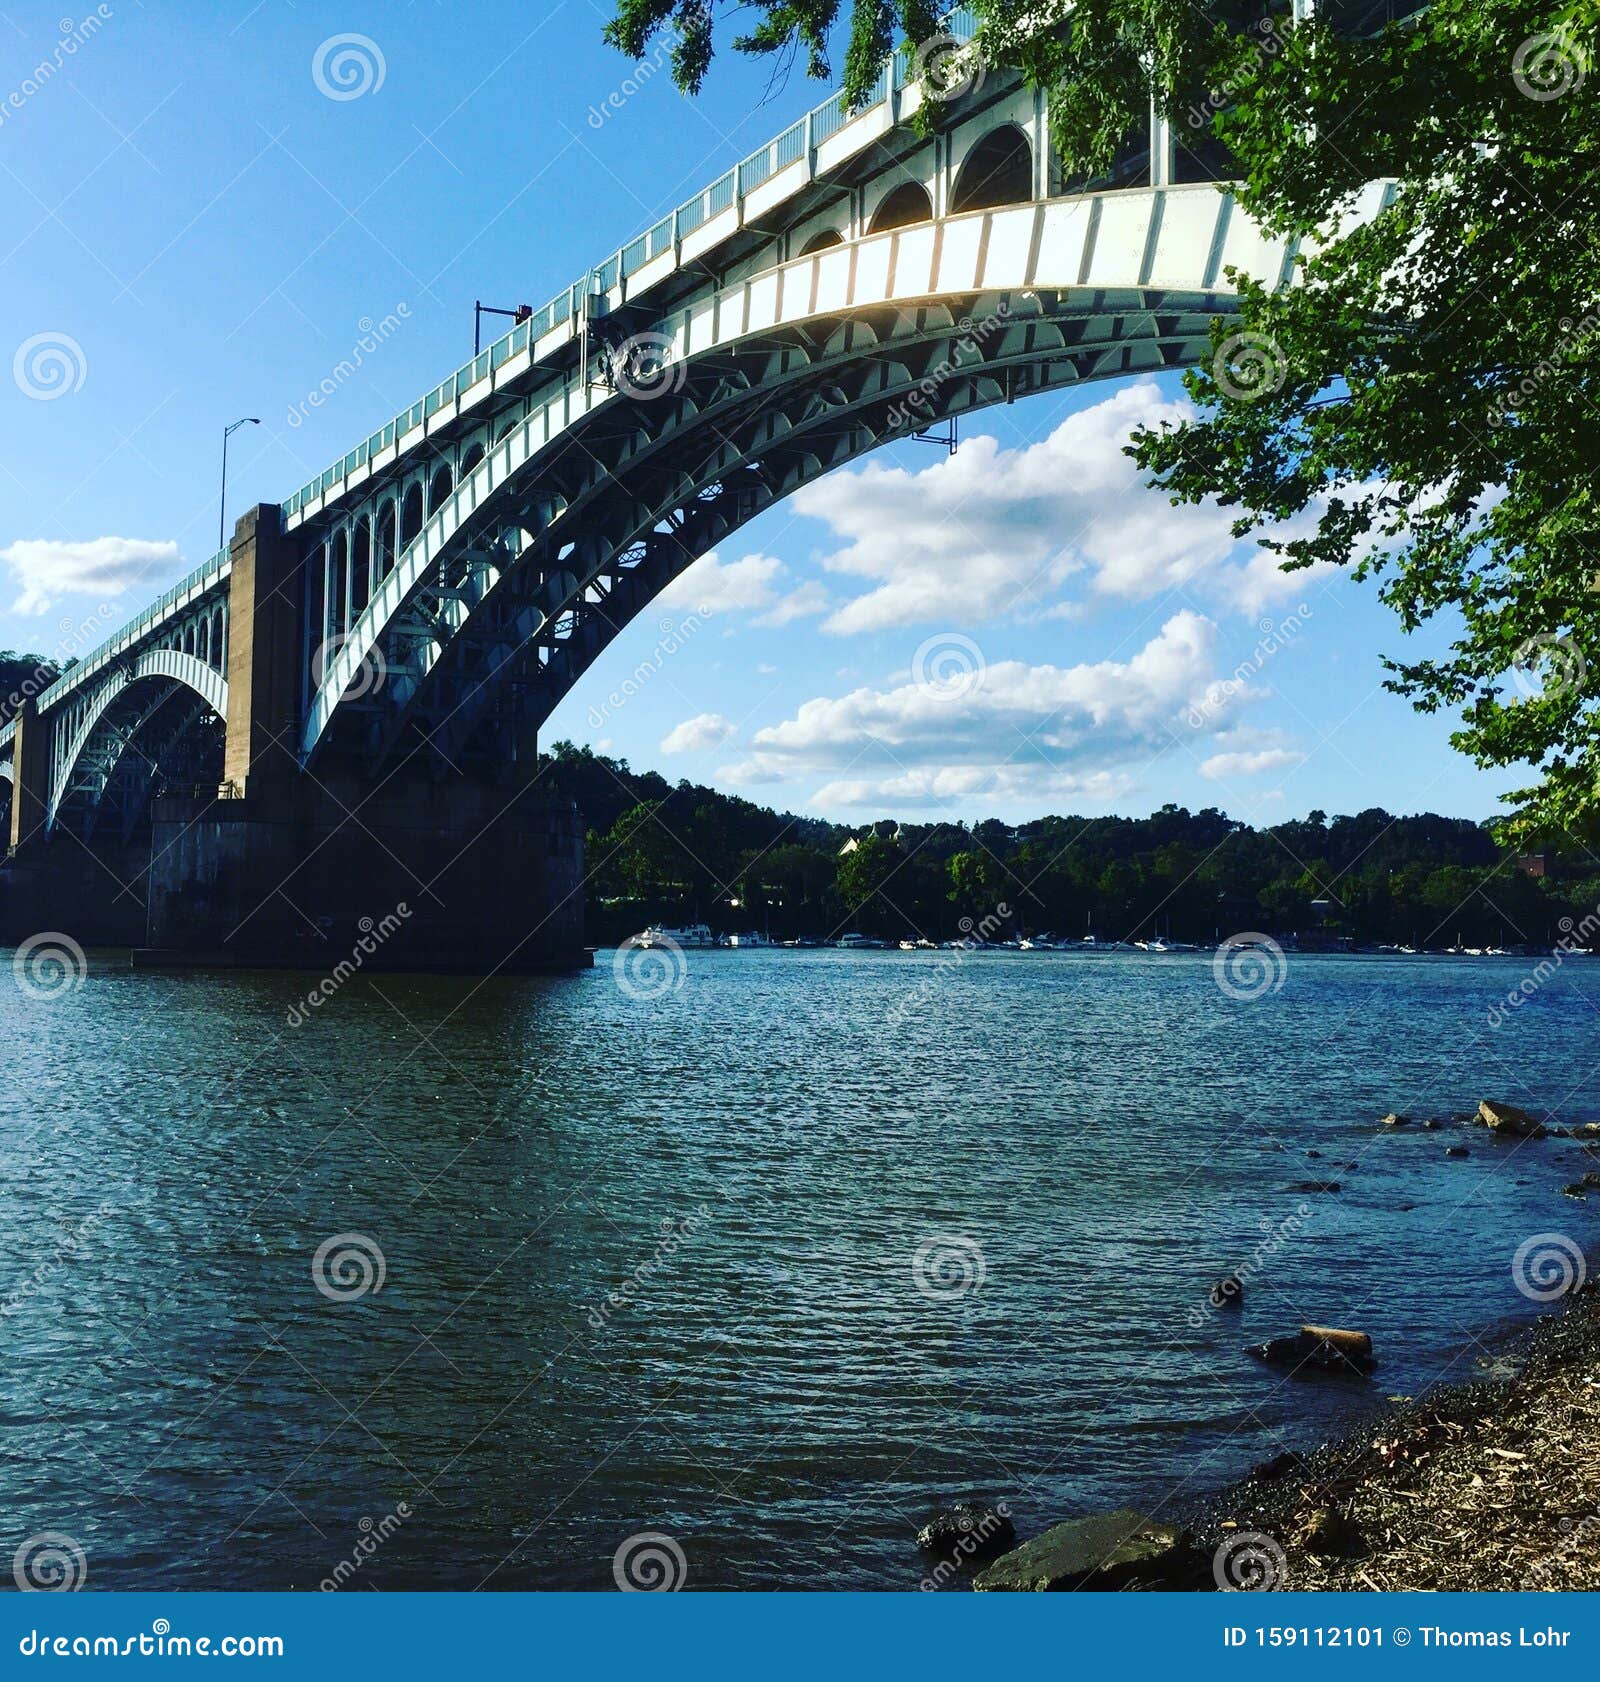 Homestead Grays Bridge Pittsburgh Pennsylvania Stock Image - Image